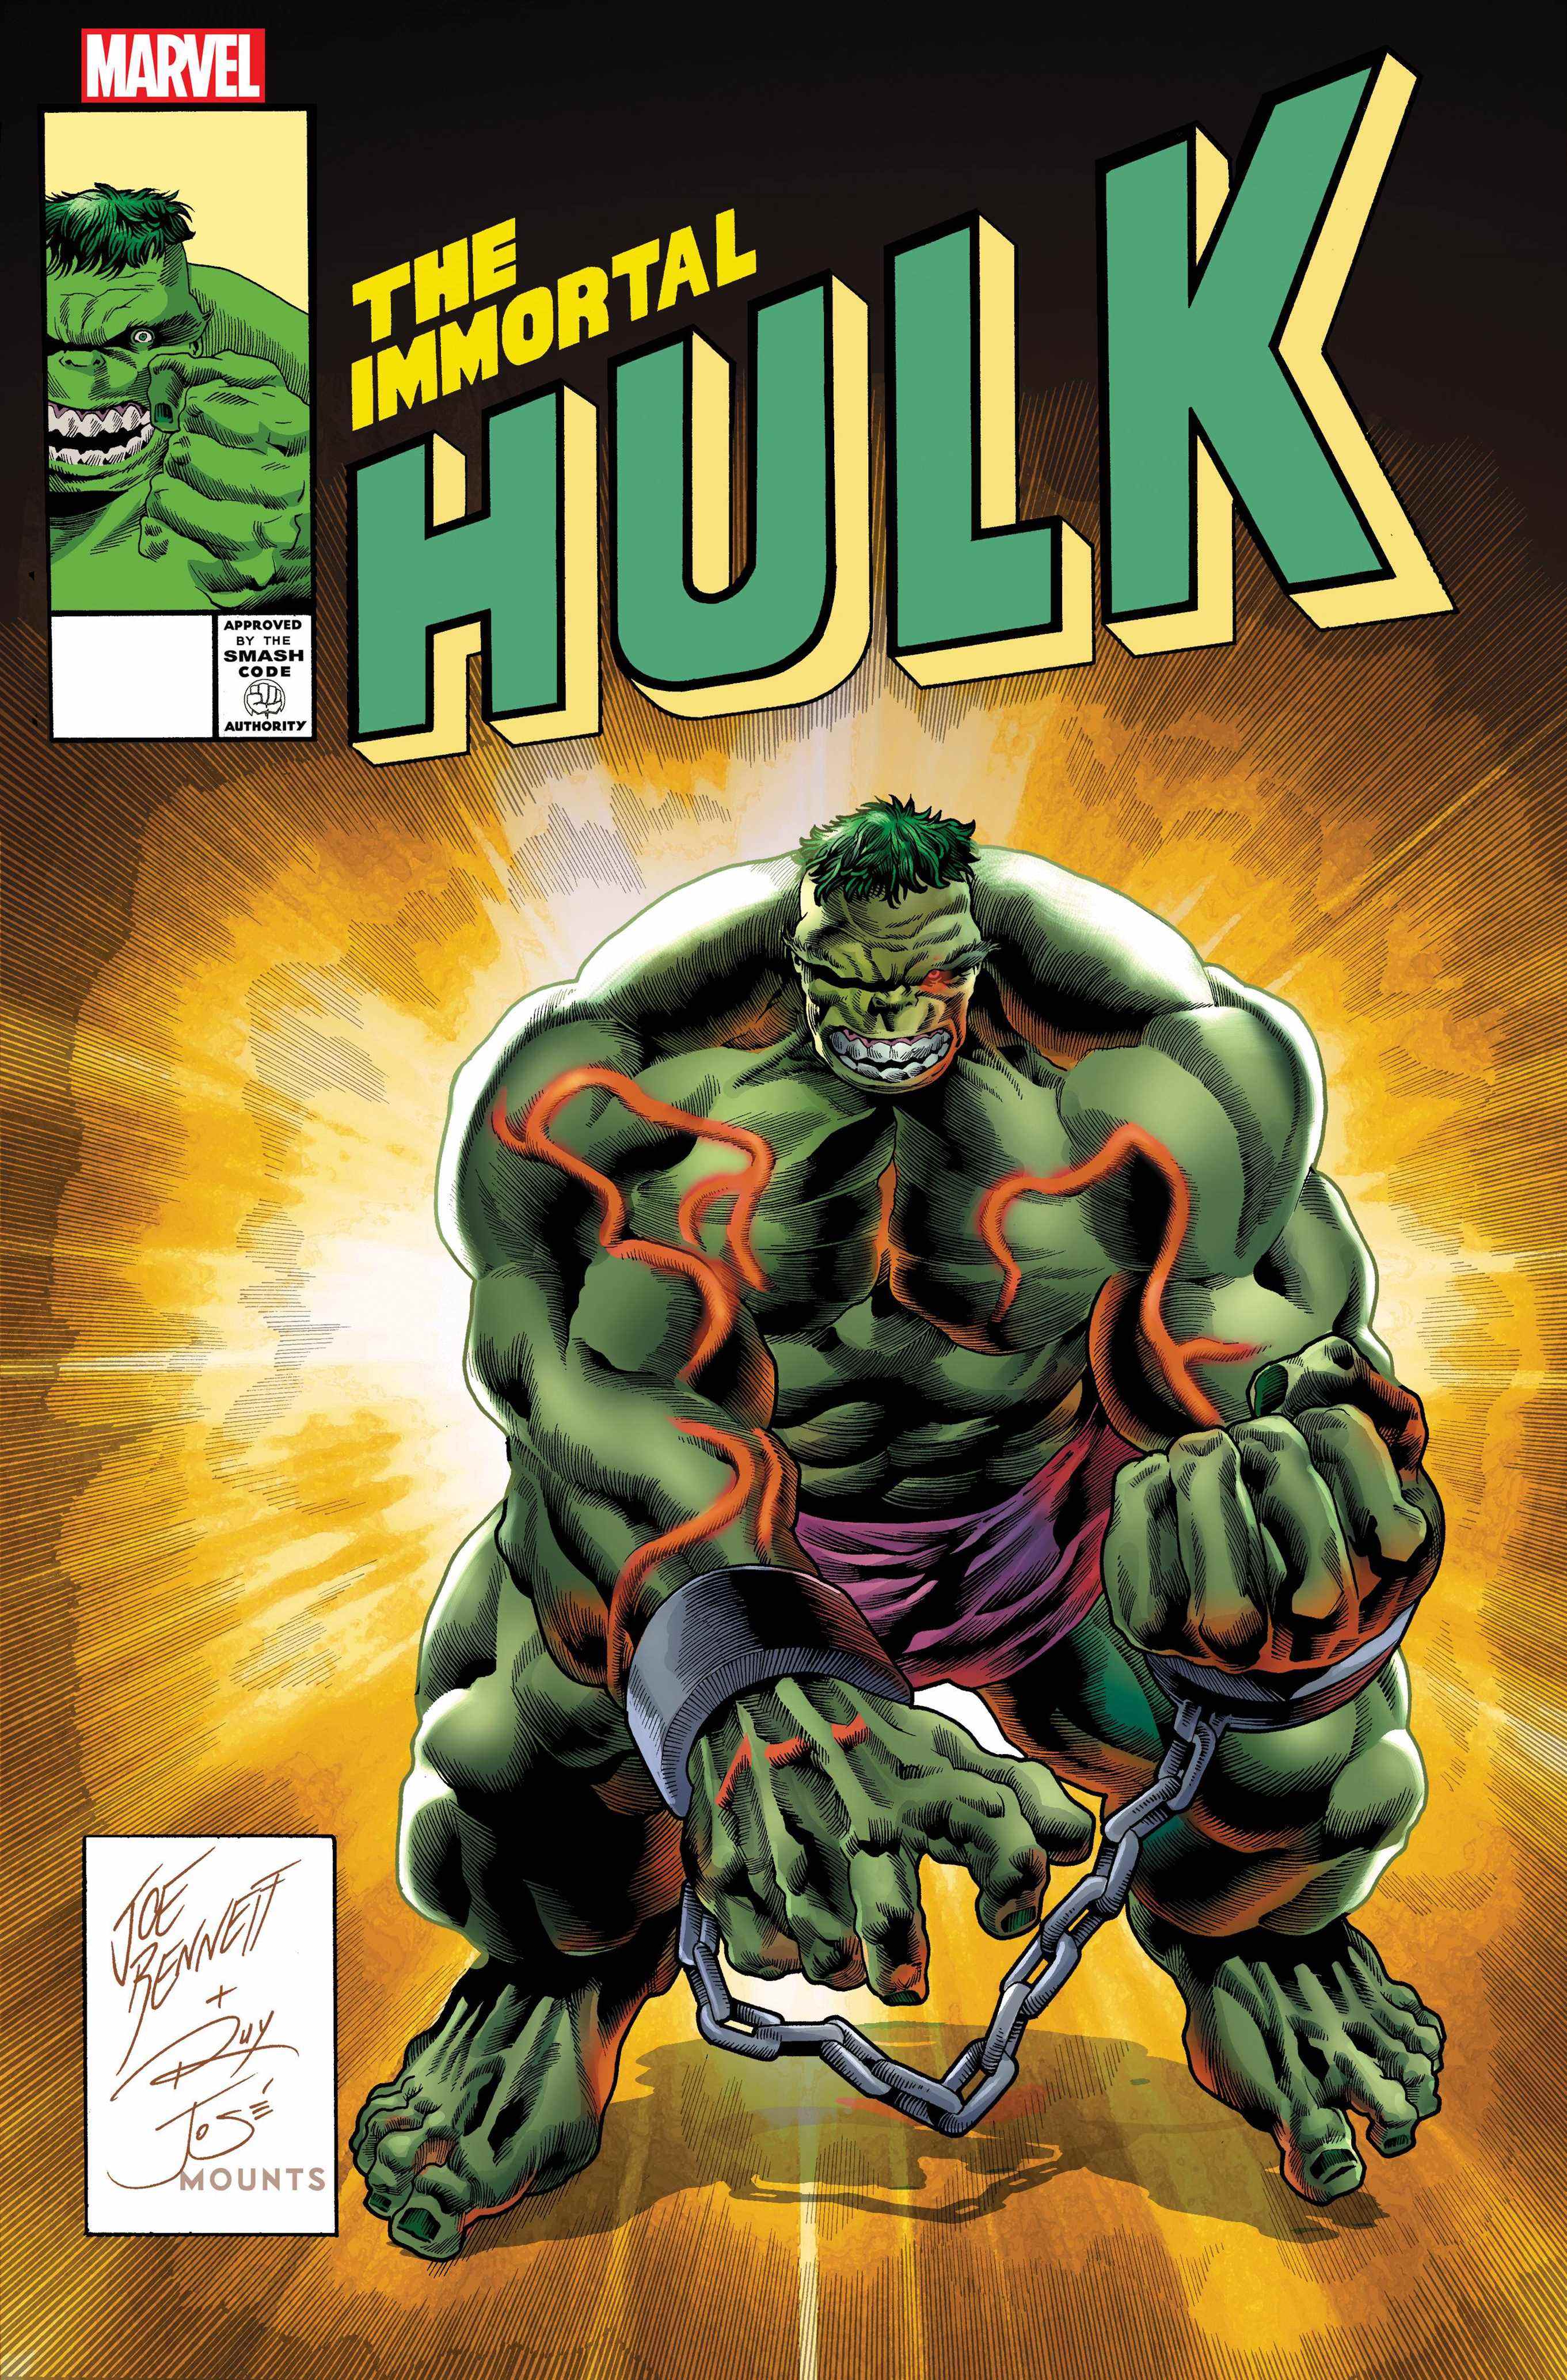 Couverture de la variante Immortal Hulk #50